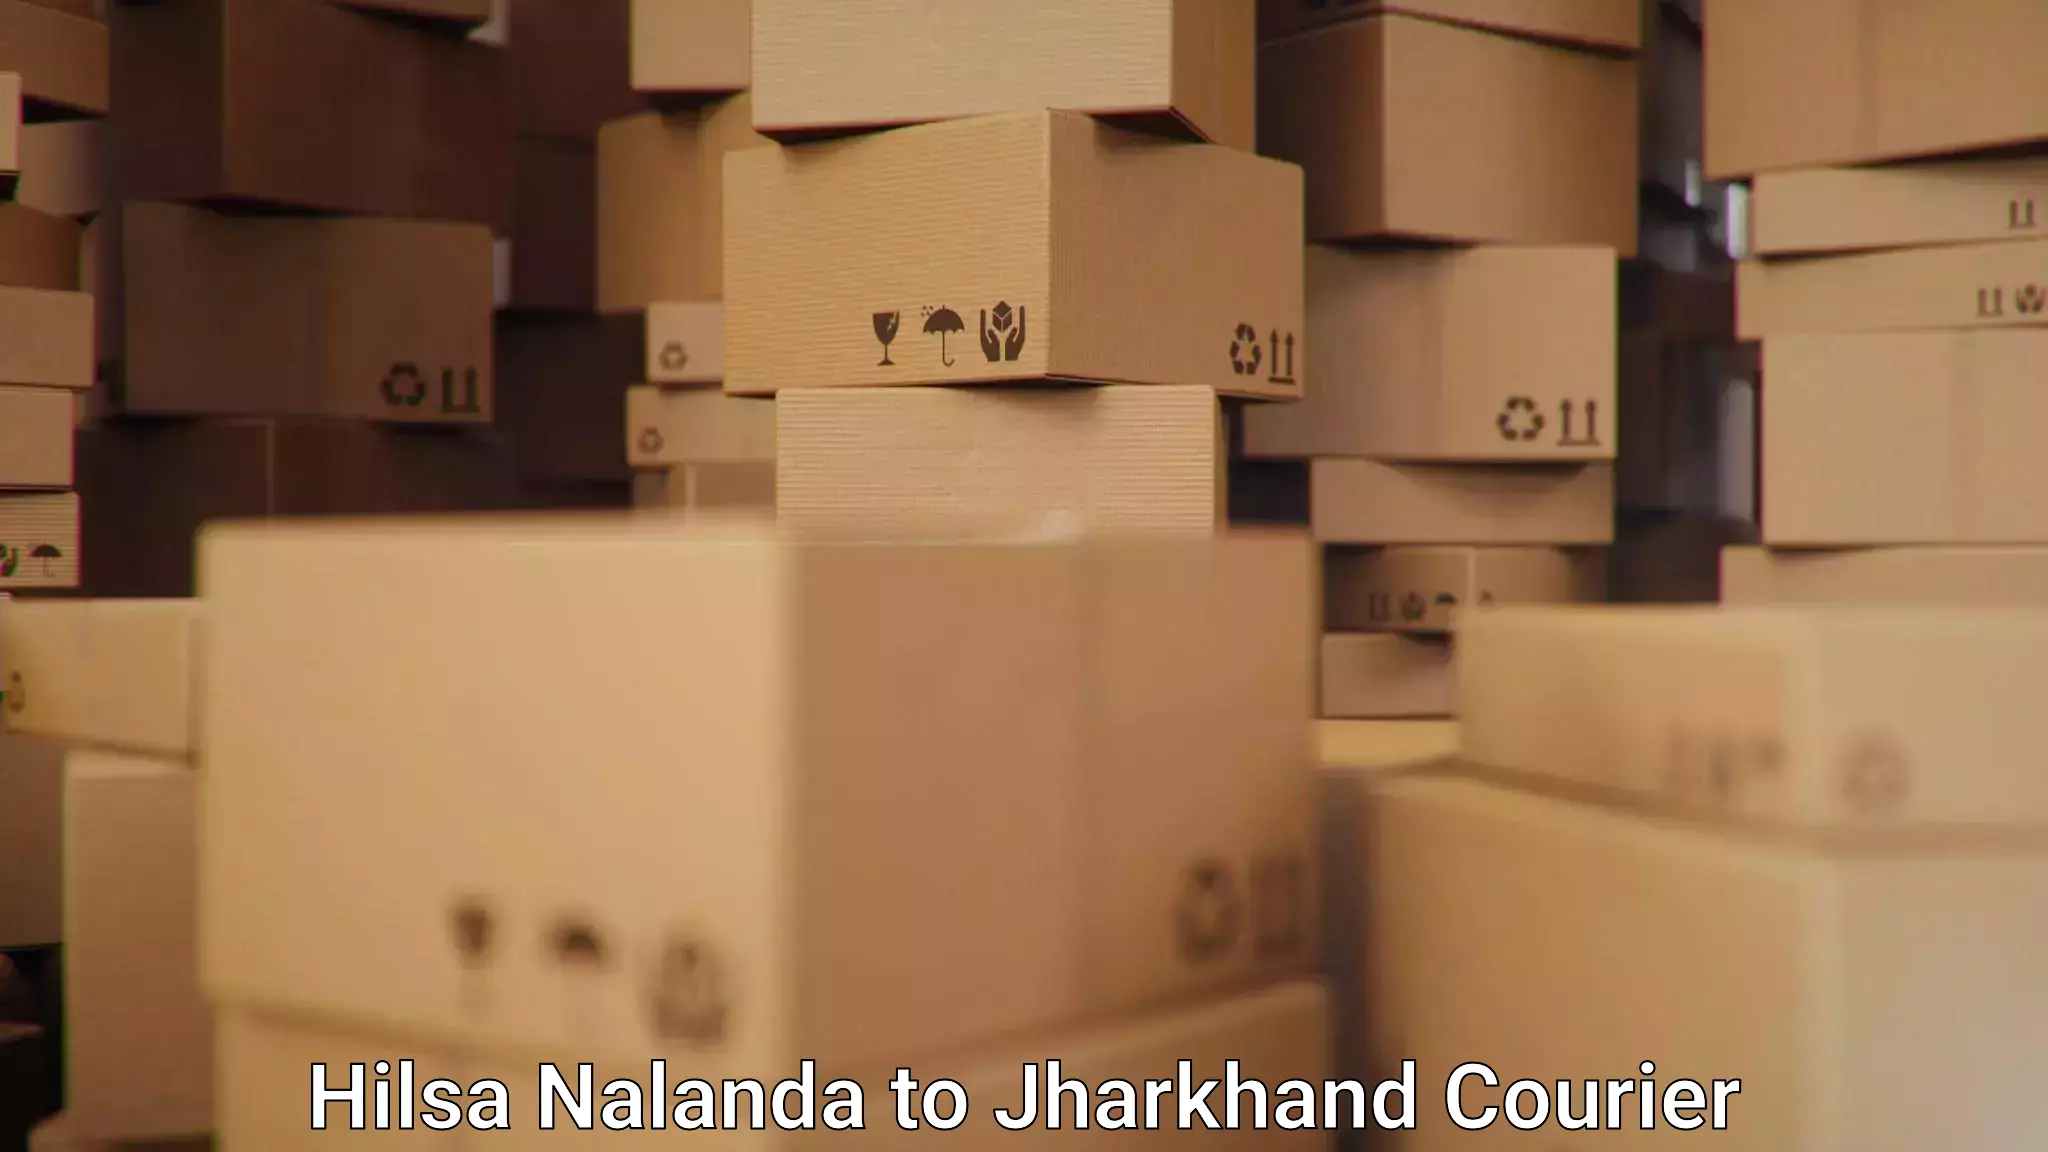 Premium delivery services Hilsa Nalanda to Tandwa